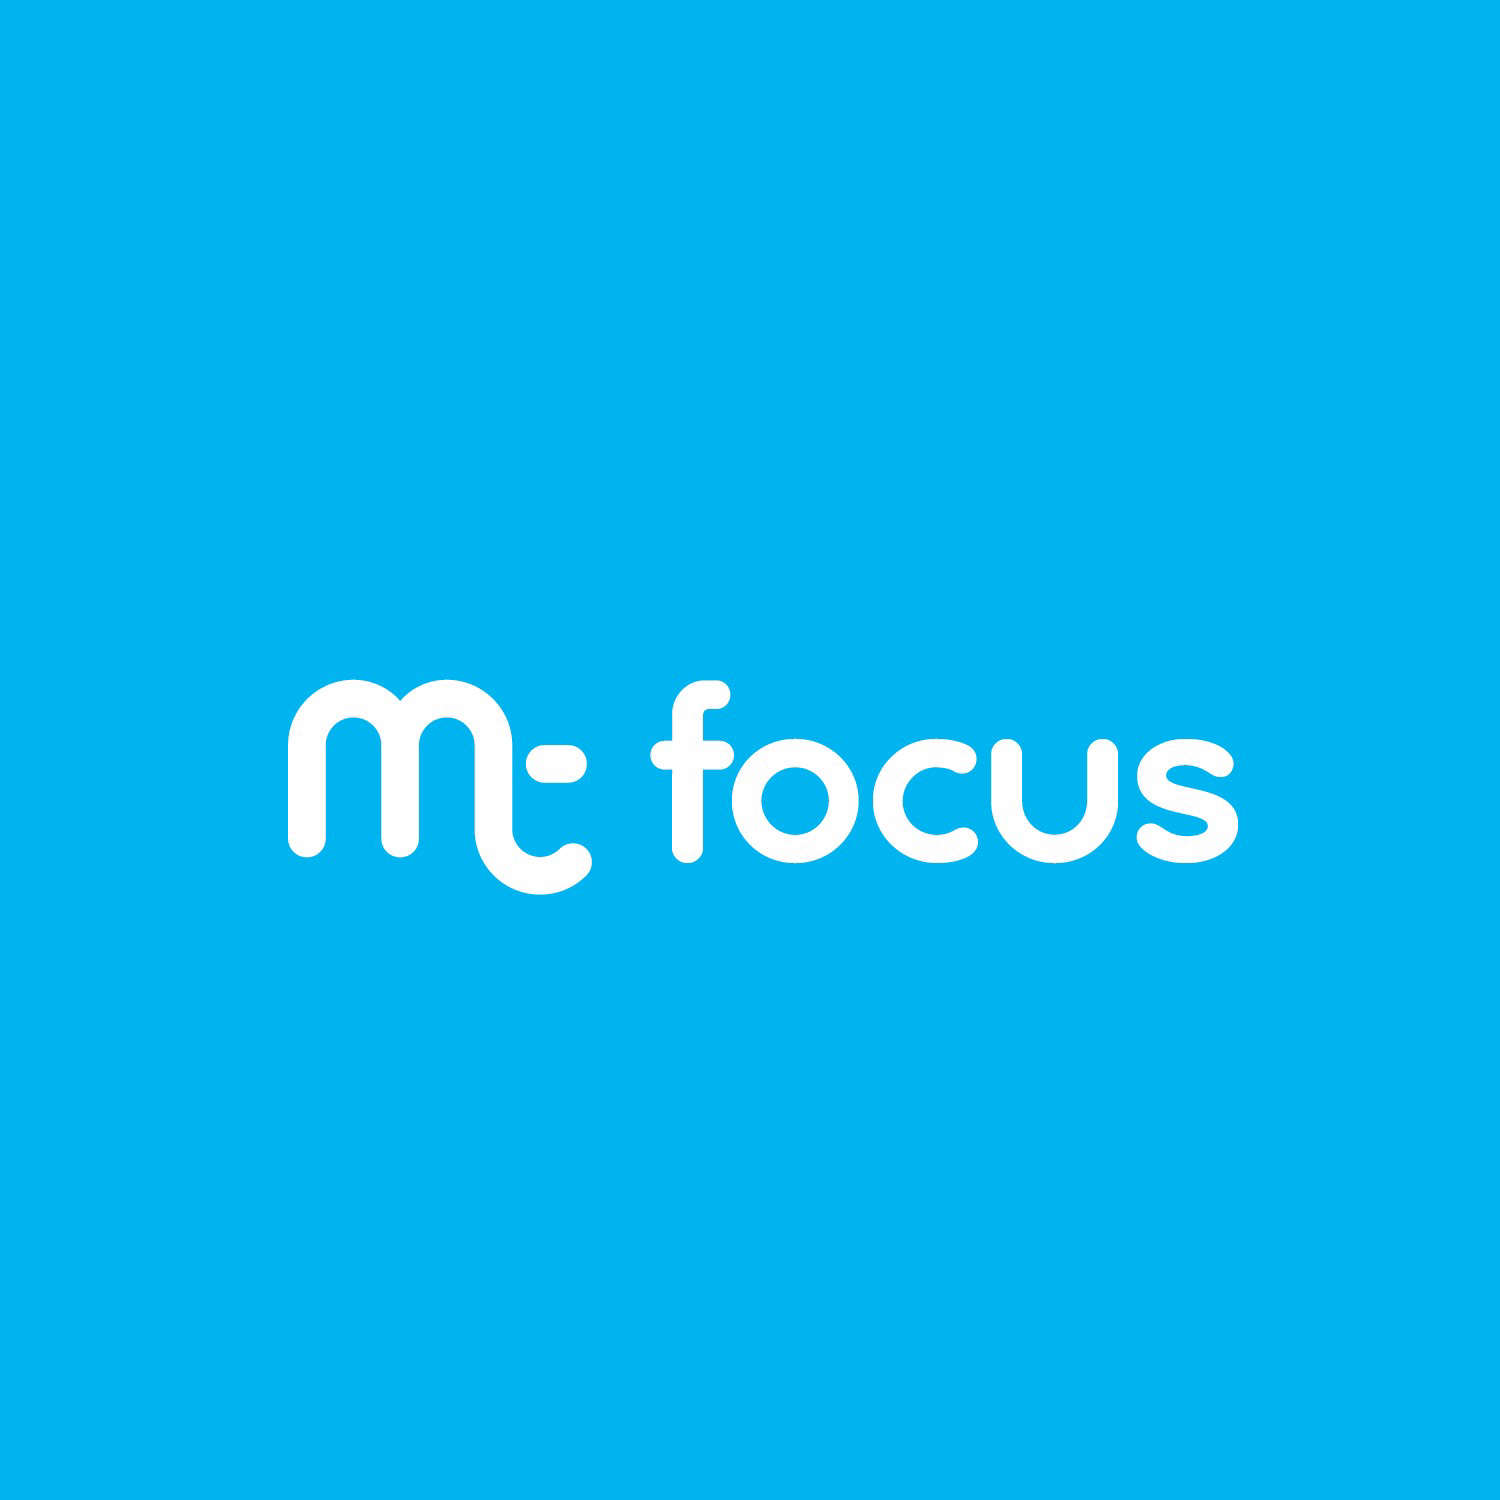 MT Focus with Manx Telecom